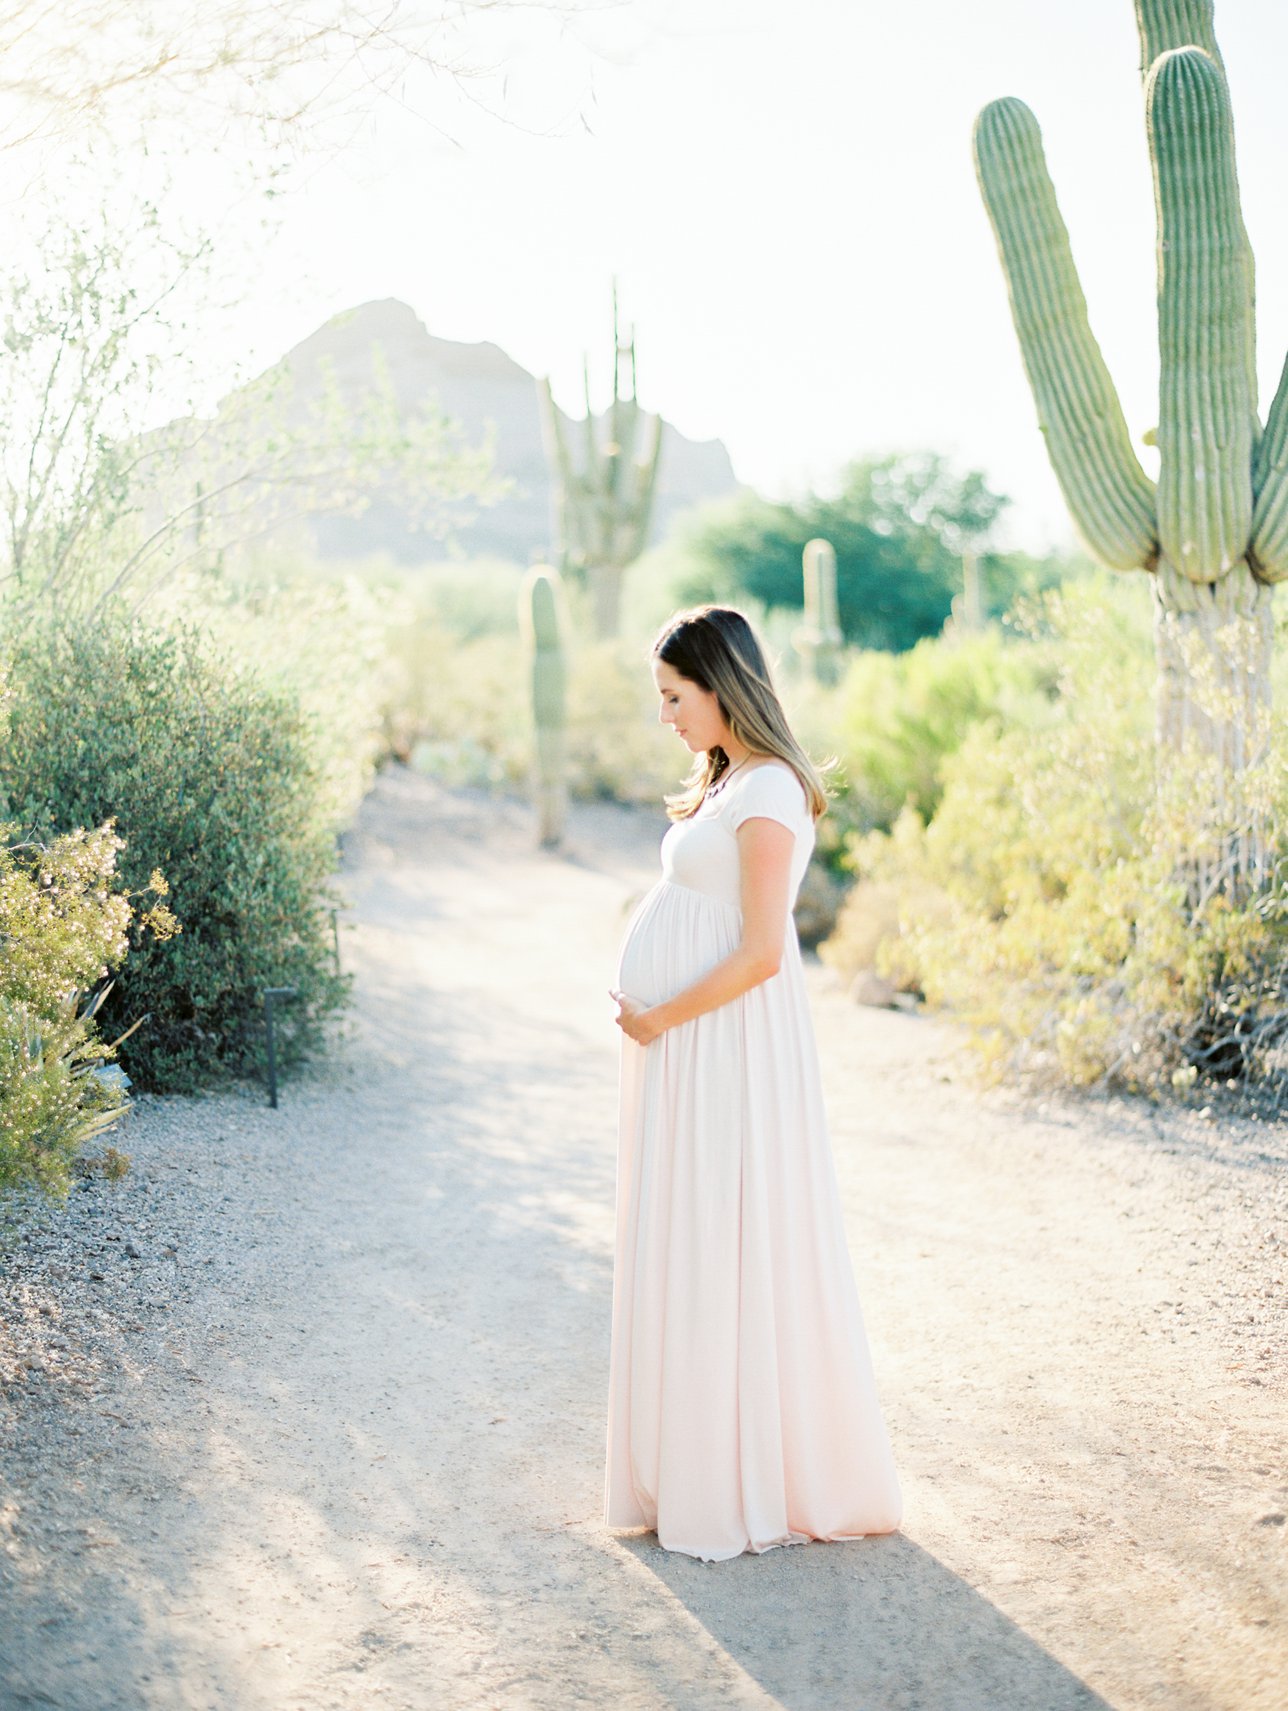 Desert maternity photos - Rachel Solomon Photography